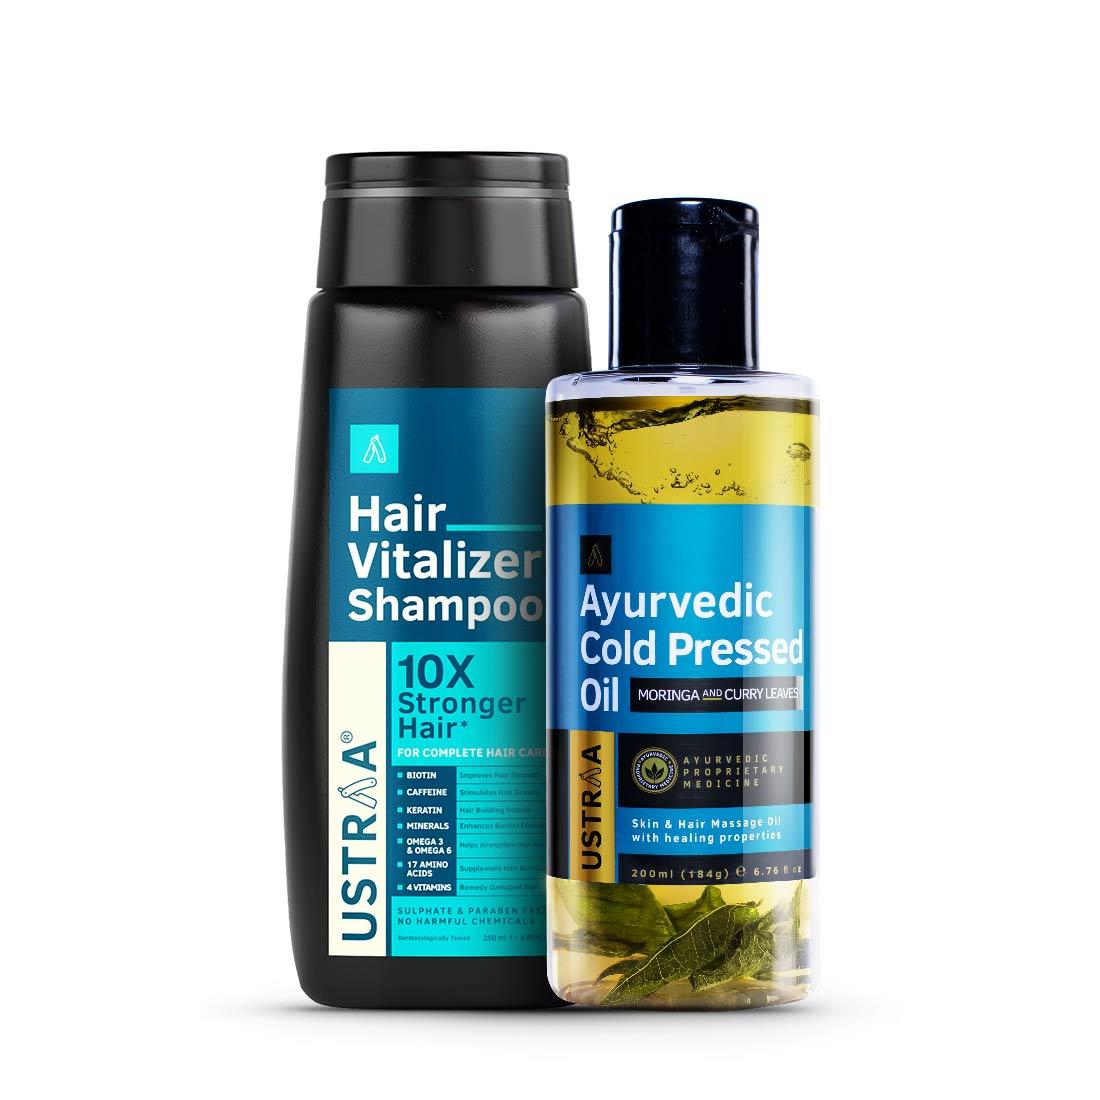 Hair Vitalizer Shampoo & Ayurvedic Cold Pressed Oil